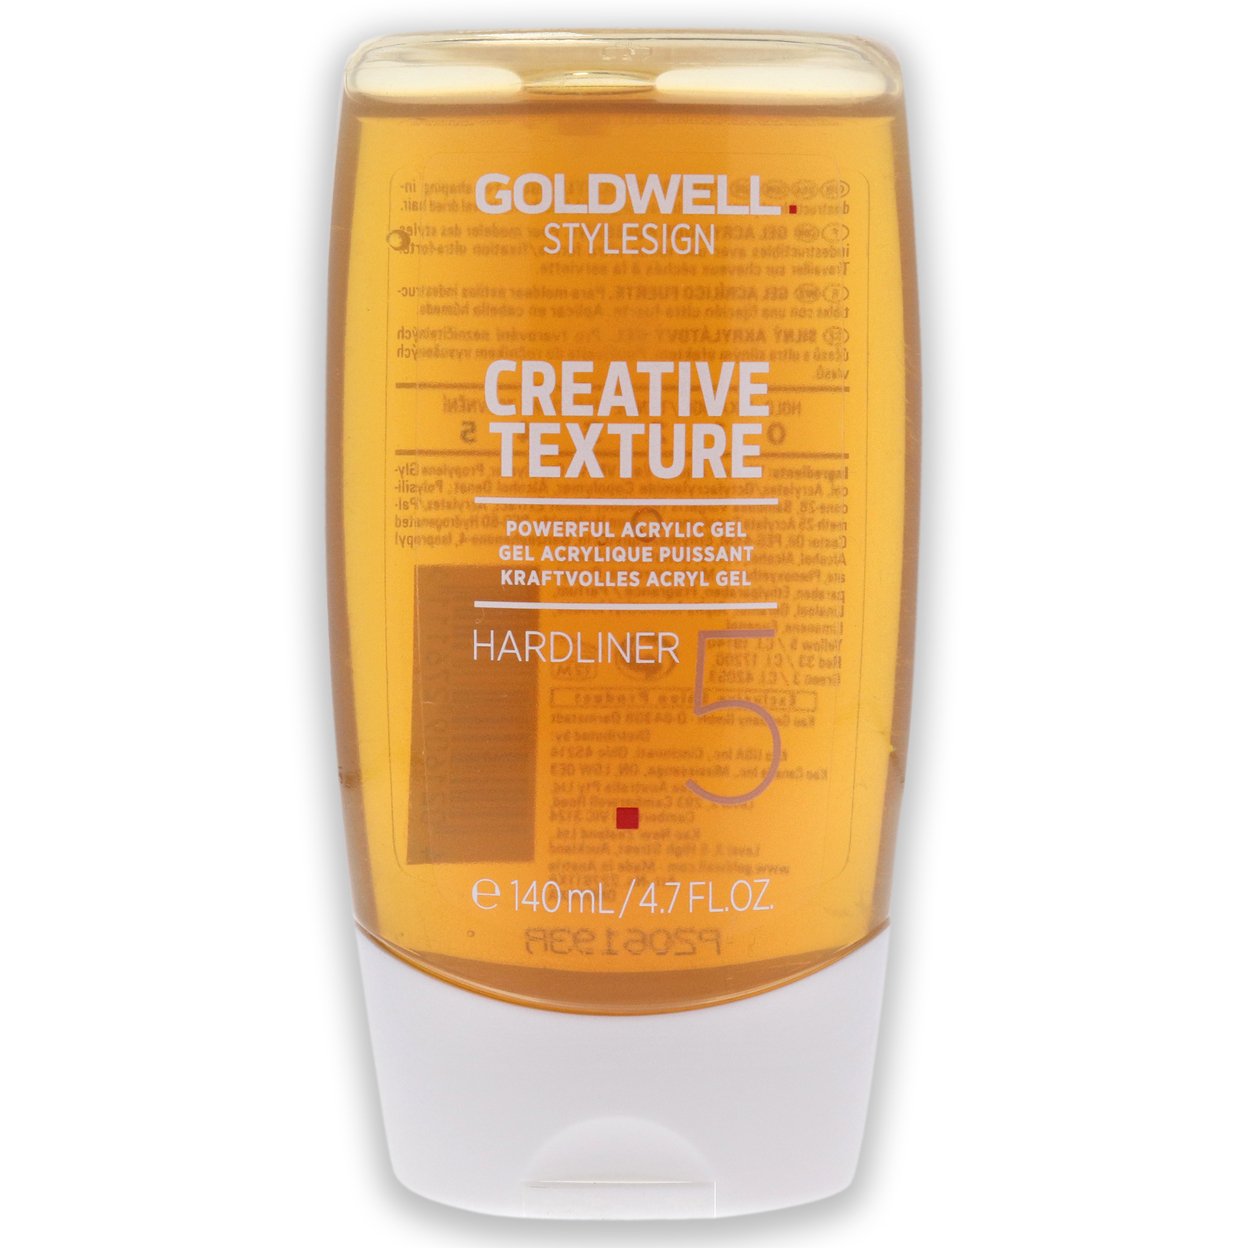 Goldwell Women HAIRCARE Stylesign Creative Texture Hardliner Acrylic Gel 4.7 Oz